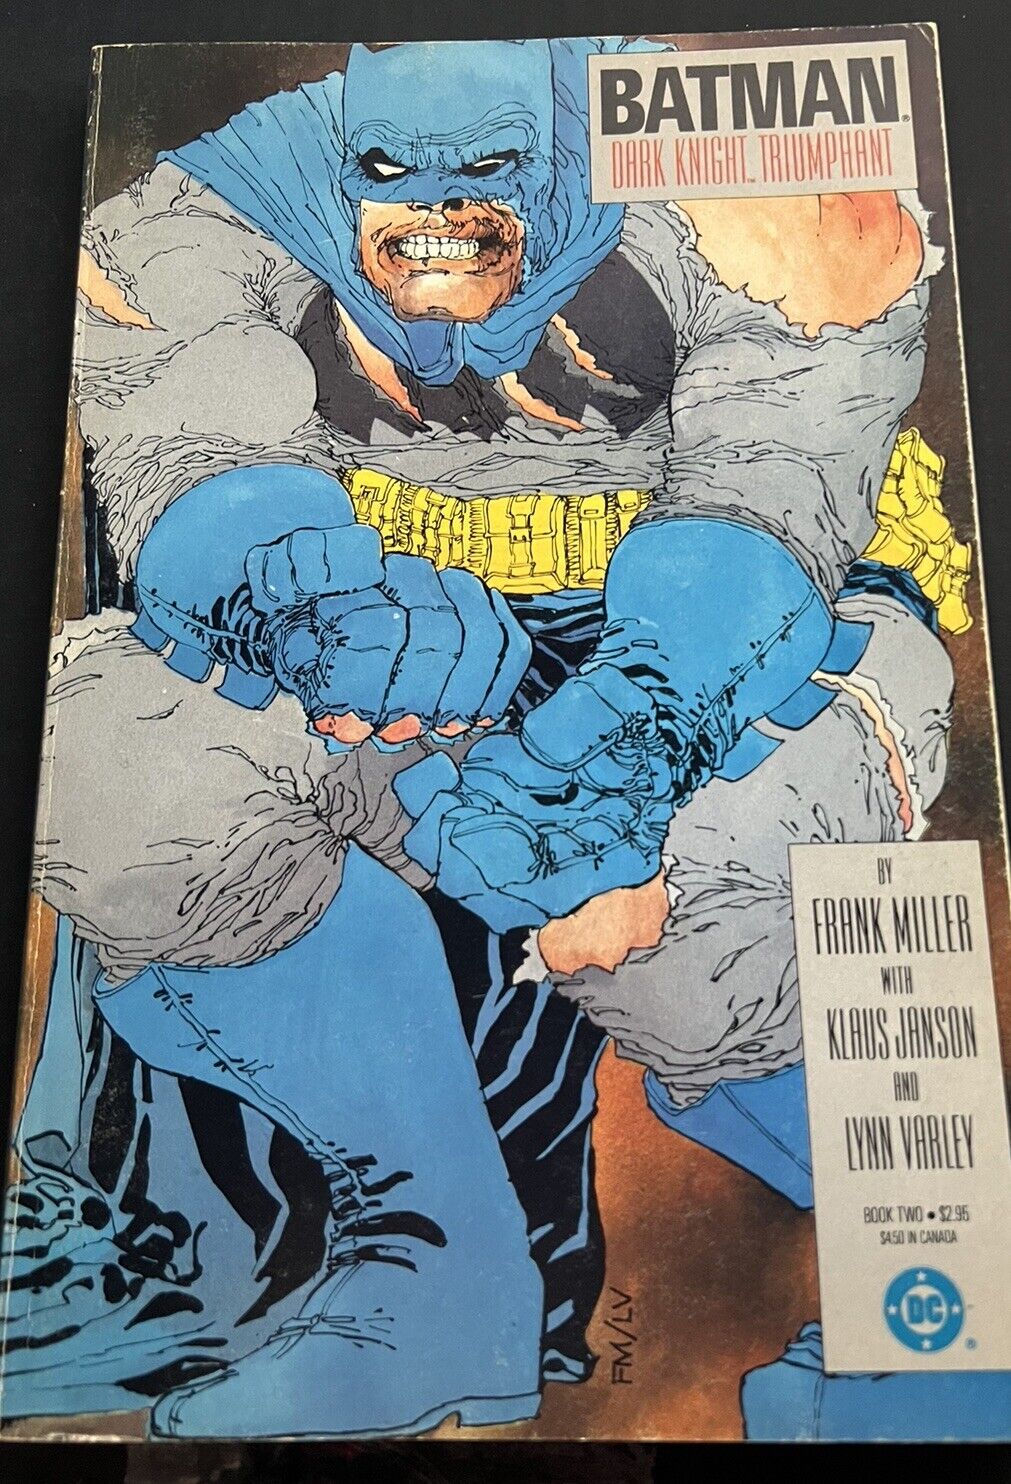 Batman: Dark Knight Triumphant #2 DC Comics 1986 1st Print By Frank Miller